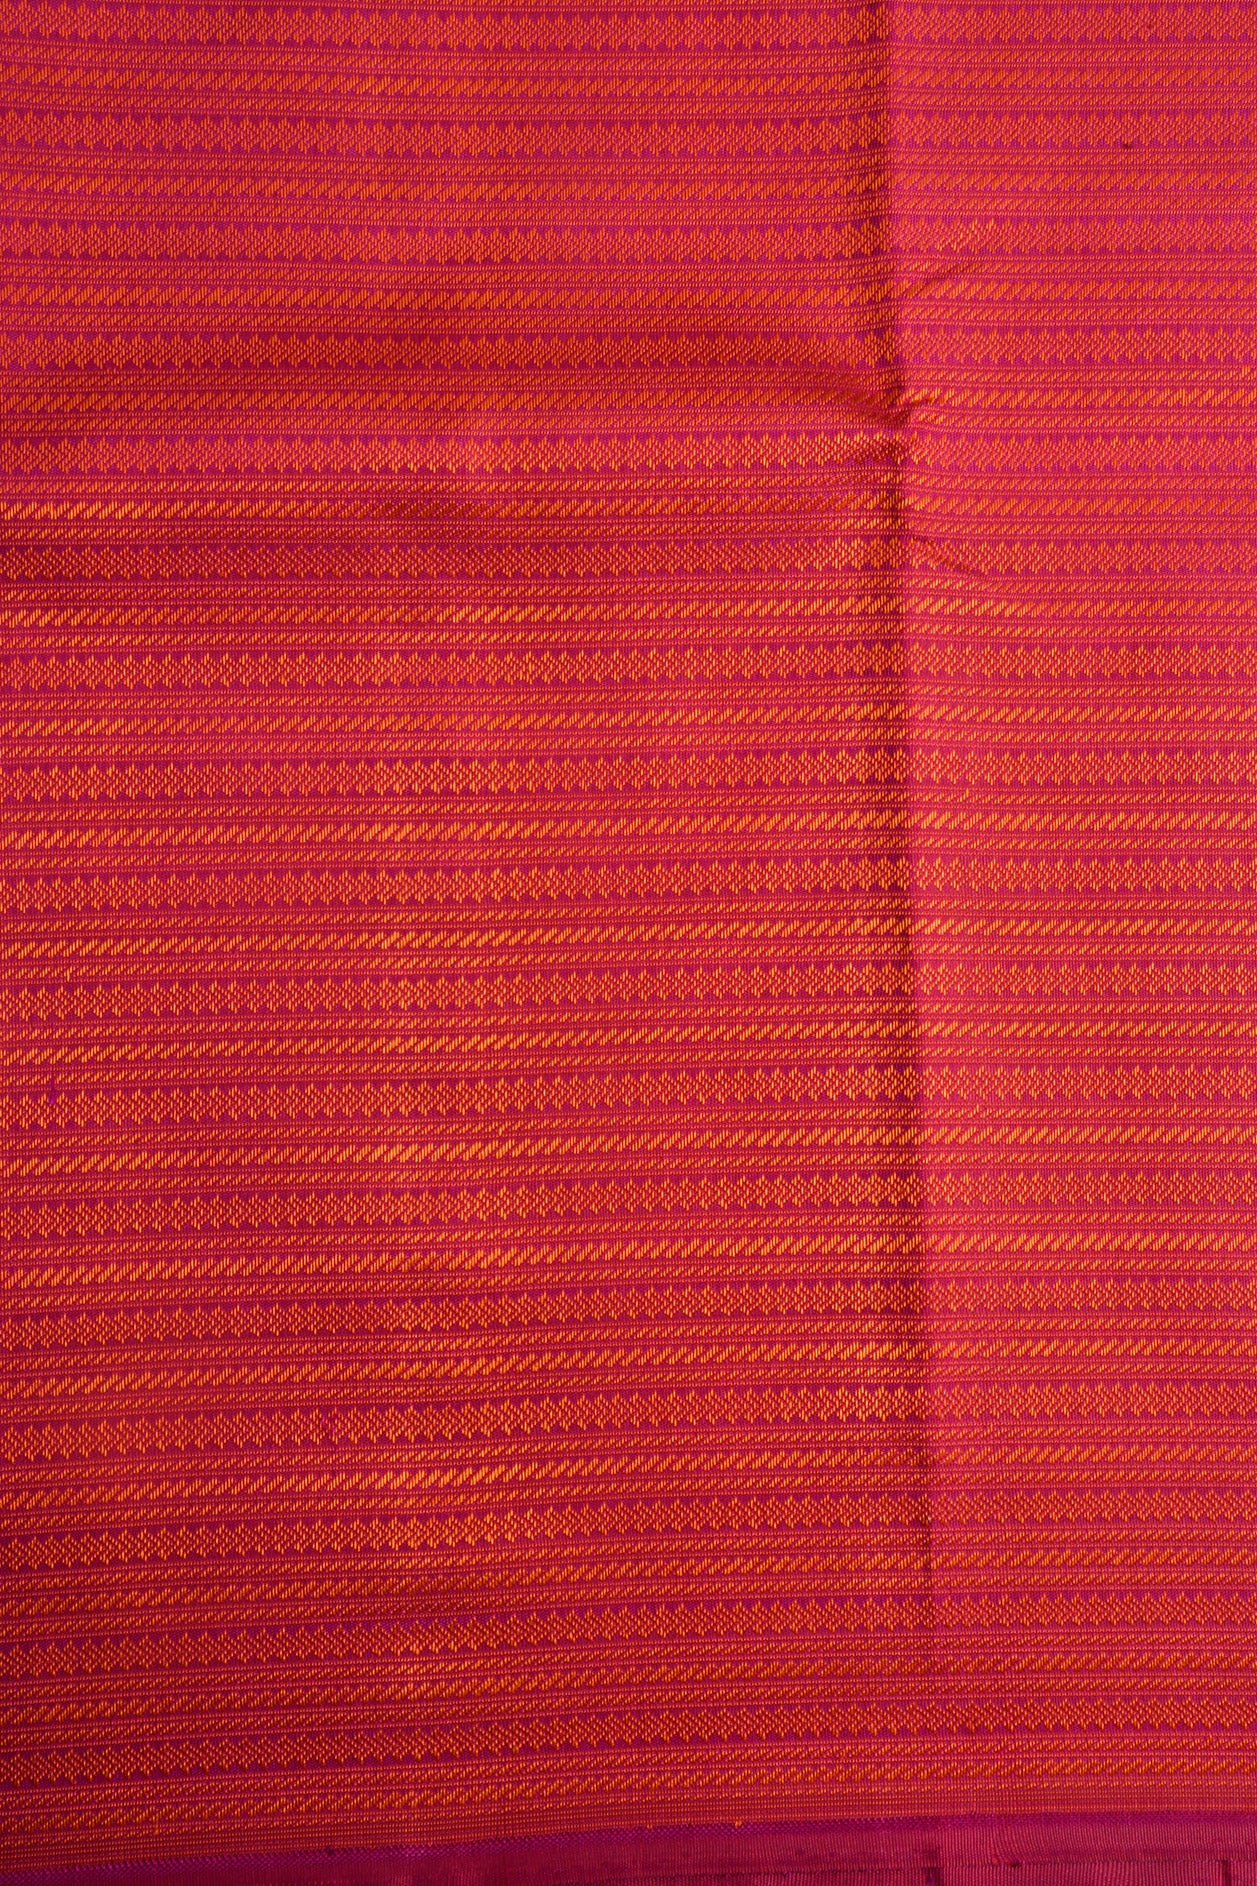 Thread Work Pinkish Orange Kanchipuram Silk Saree